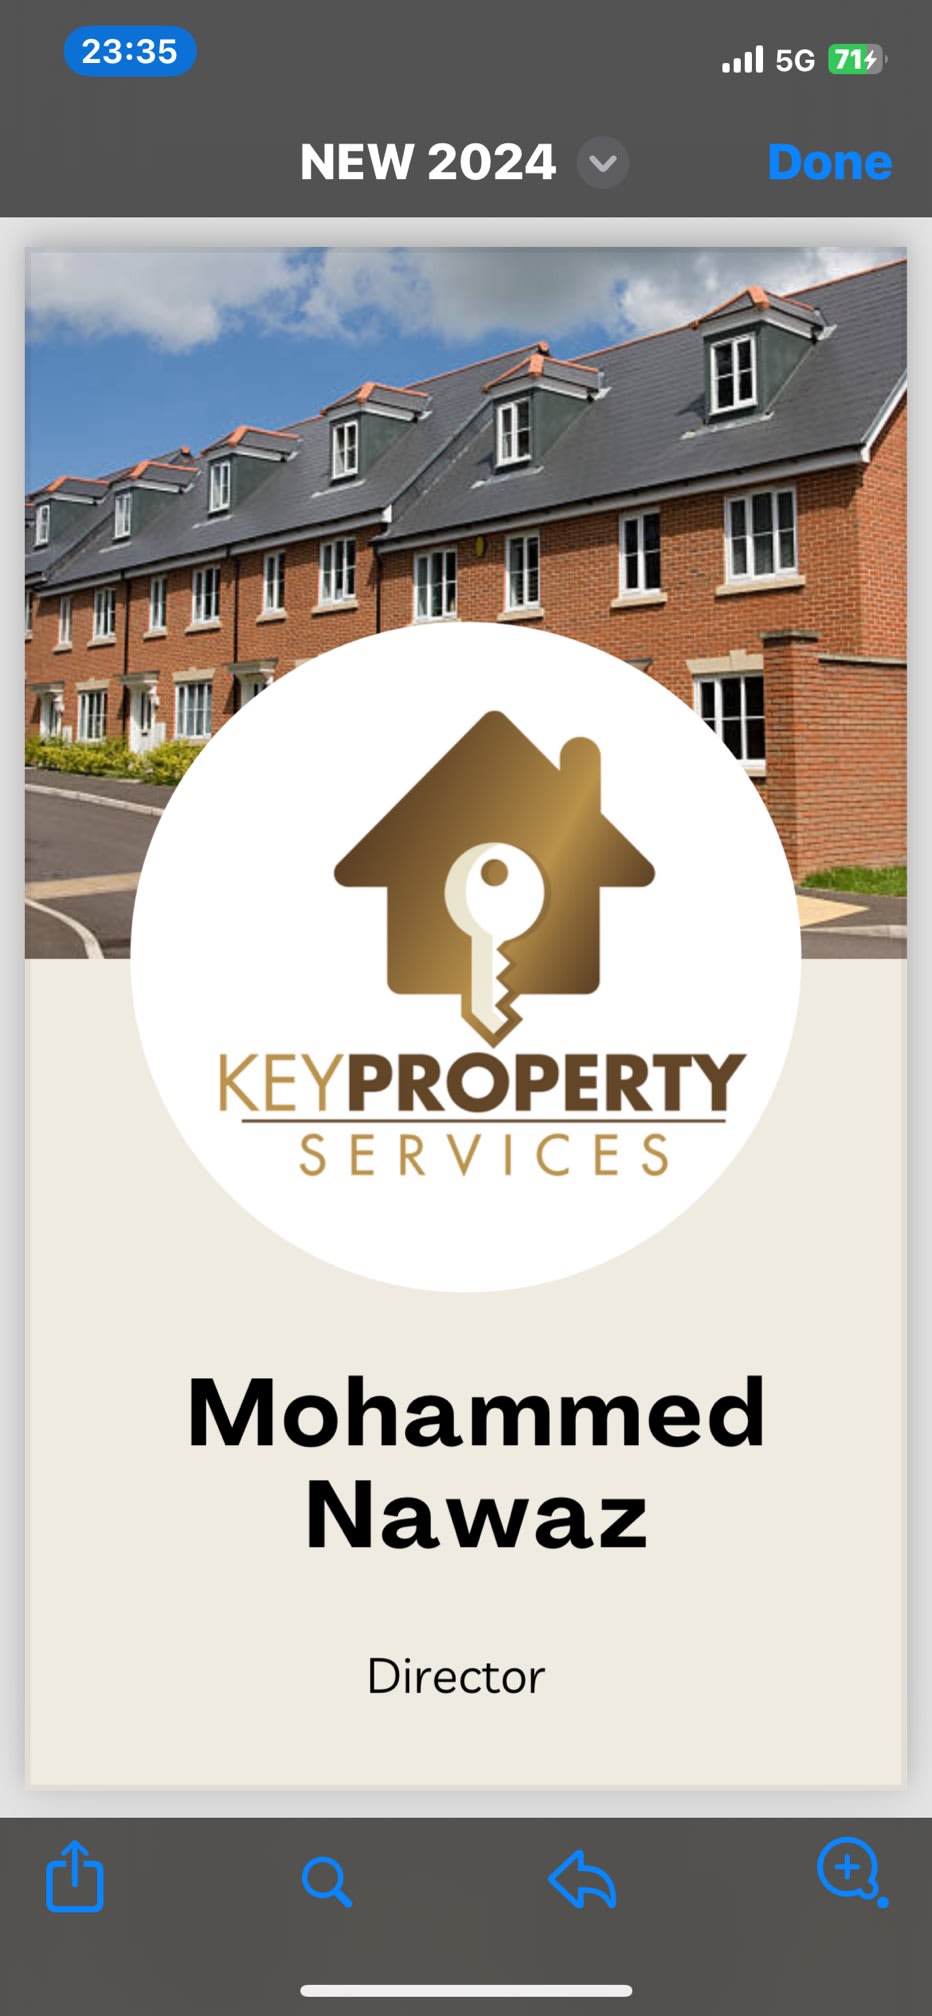 Key Property Services Bedford Ltd Bedford 01234 270270